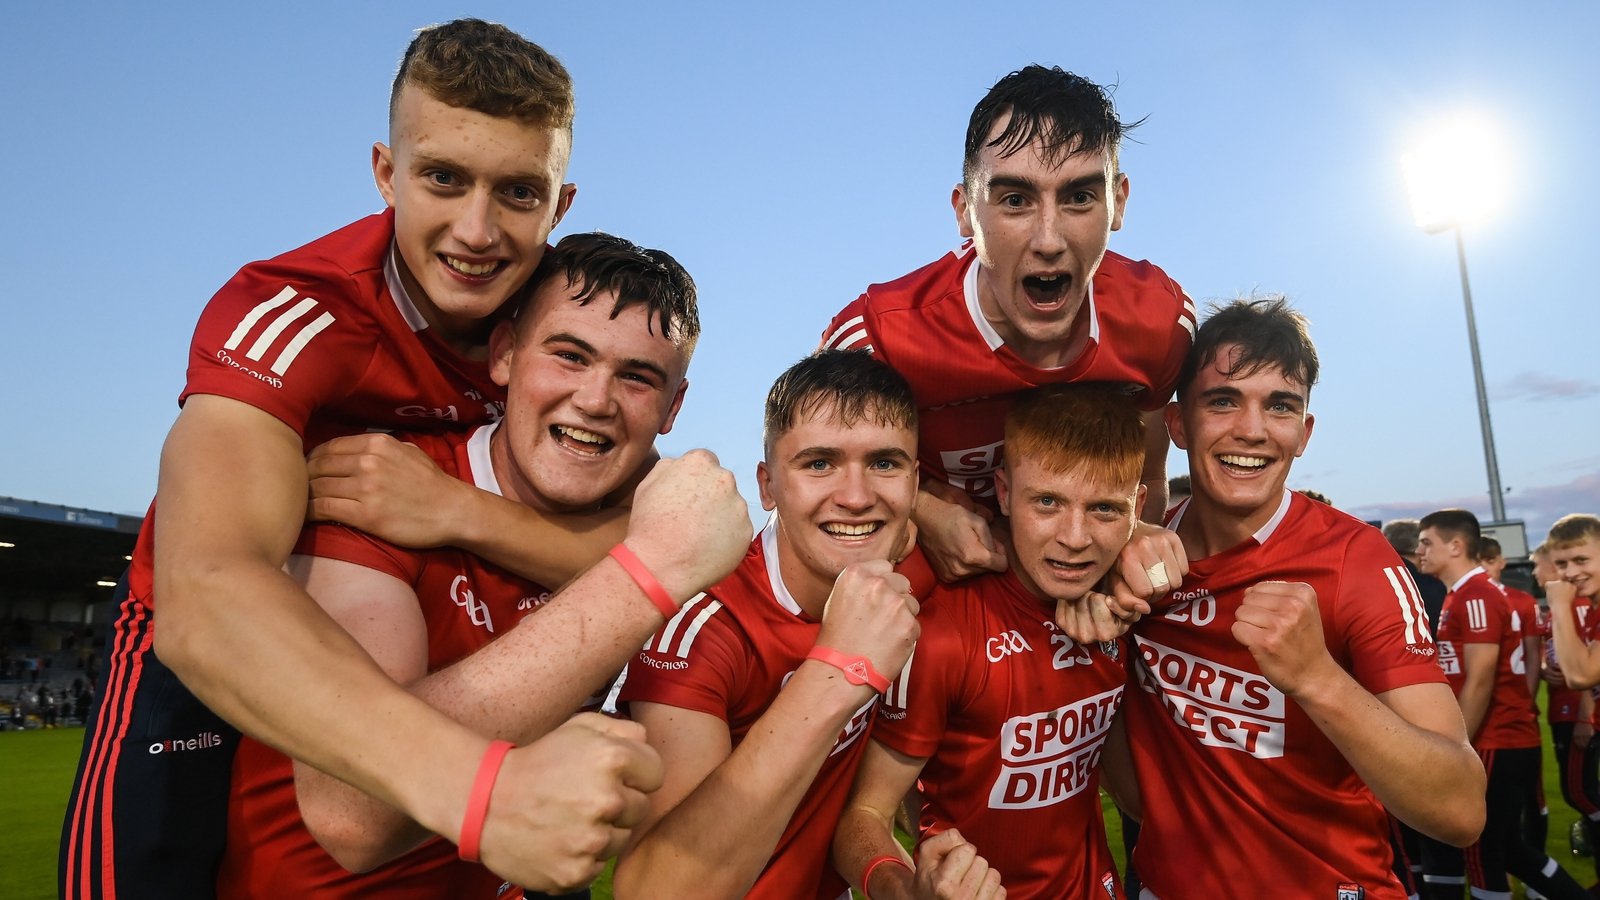 2021 Munster Minor and Under 20 Championship Fixtures Confirmed - Cork GAA